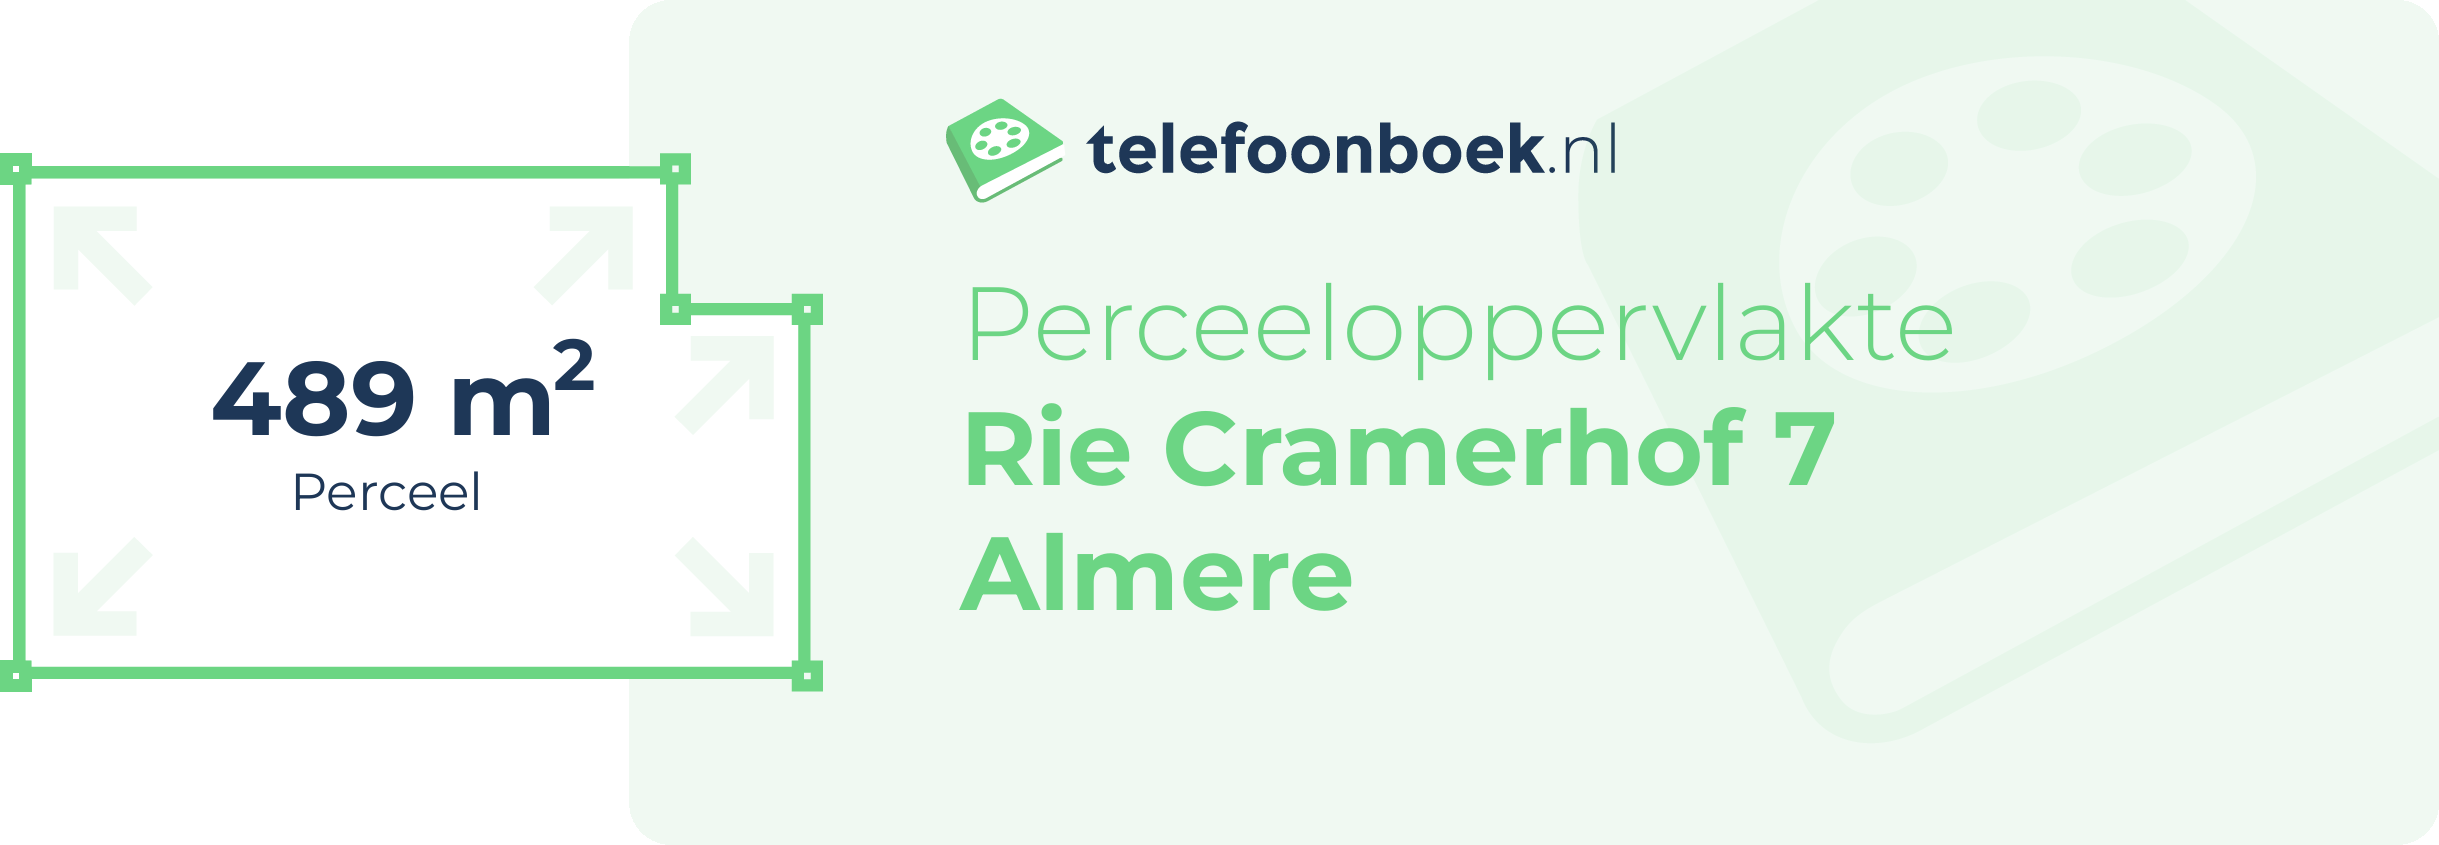 Perceeloppervlakte Rie Cramerhof 7 Almere